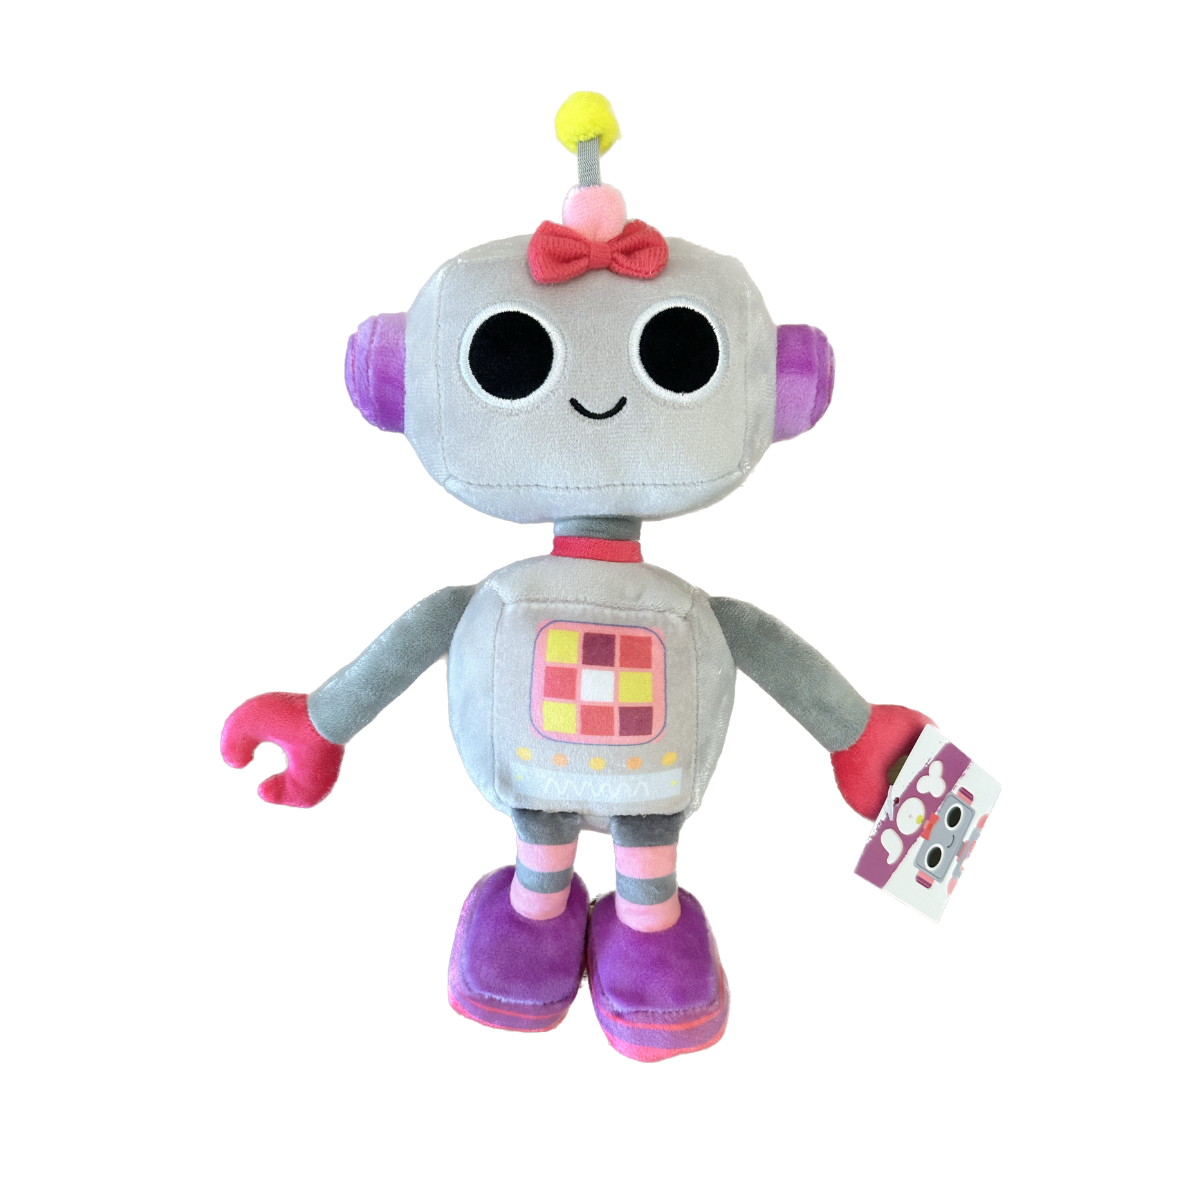 Listener Kids Joy The Robot Plush | Soft, Gray, Stuffed Toy